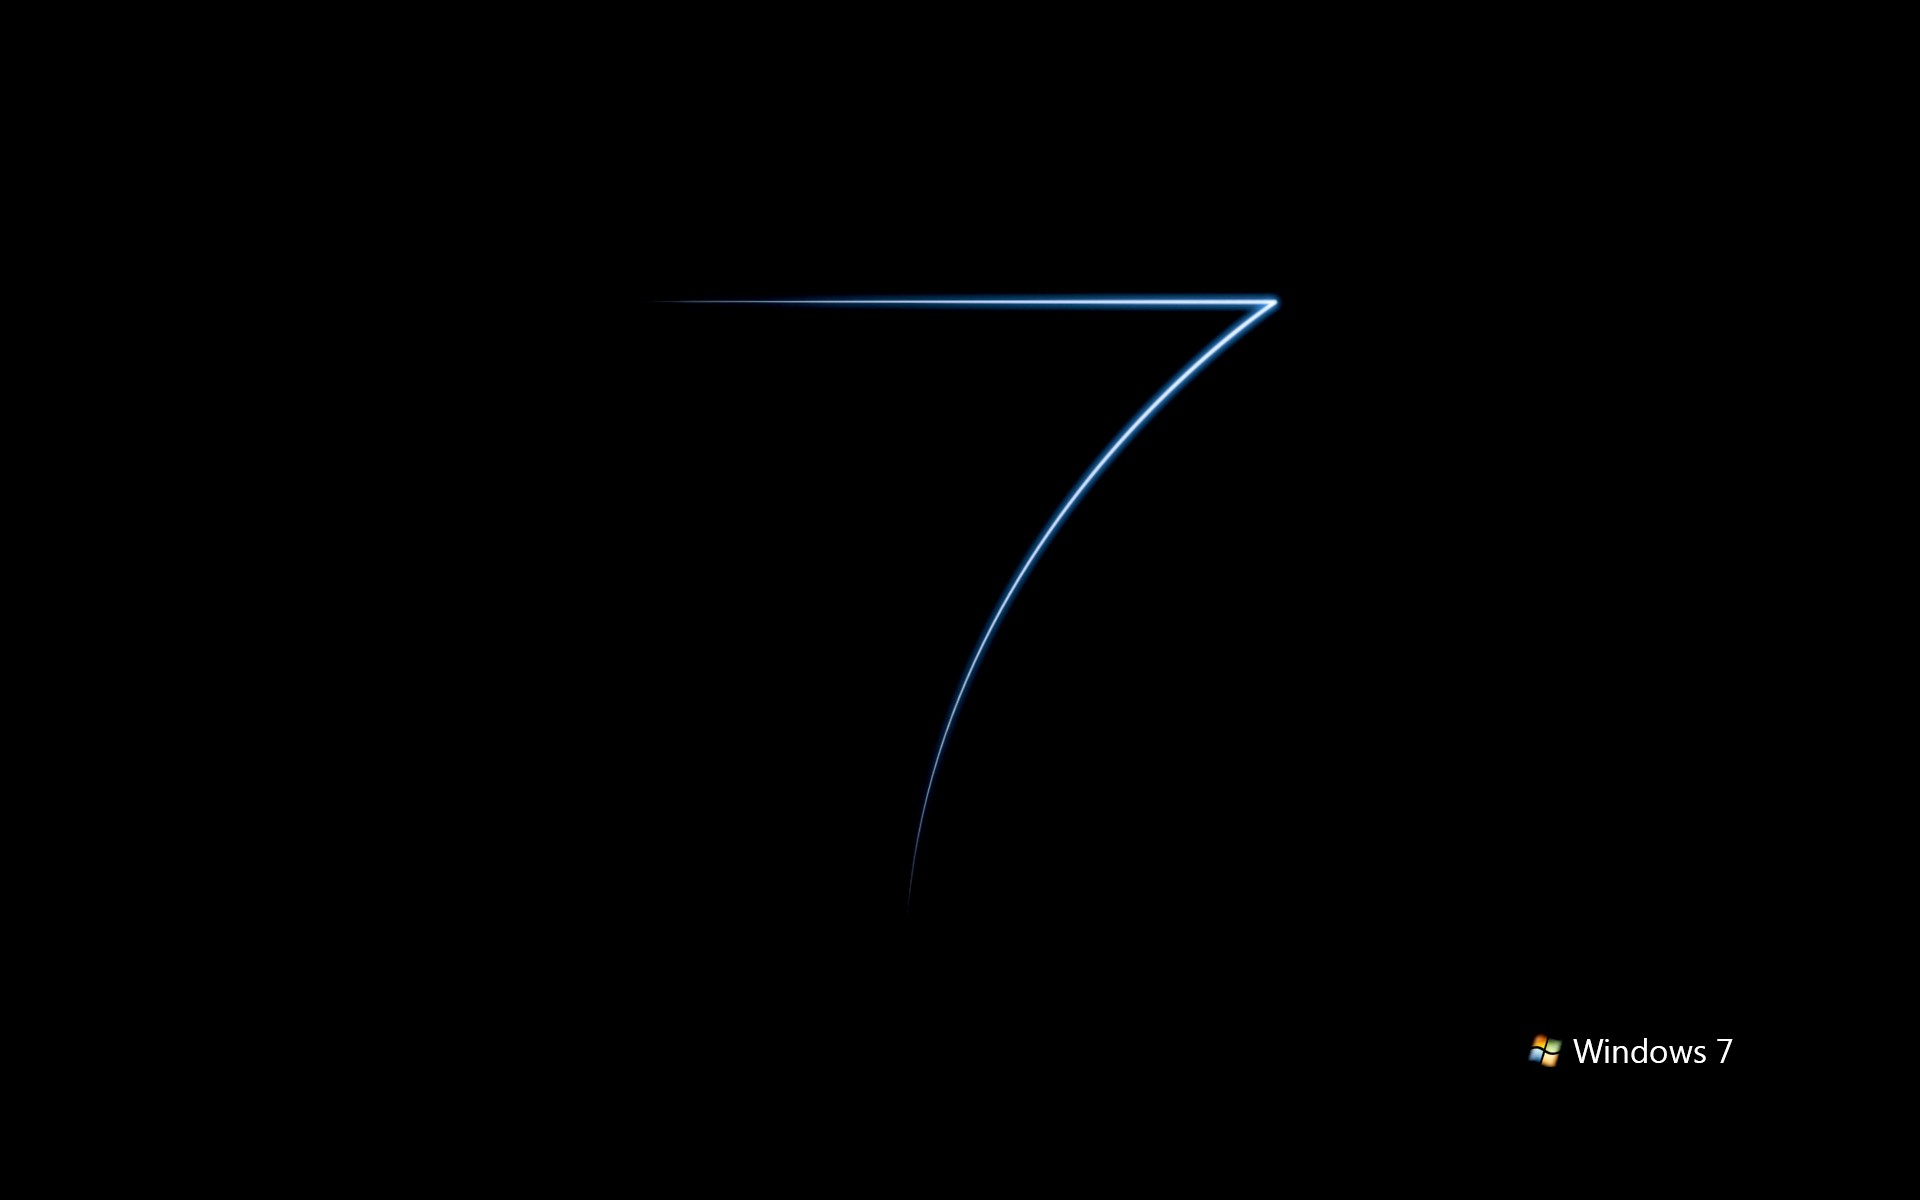 General 1920x1200 Microsoft Windows operating system logo black background Windows 7 minimalism icon simple background